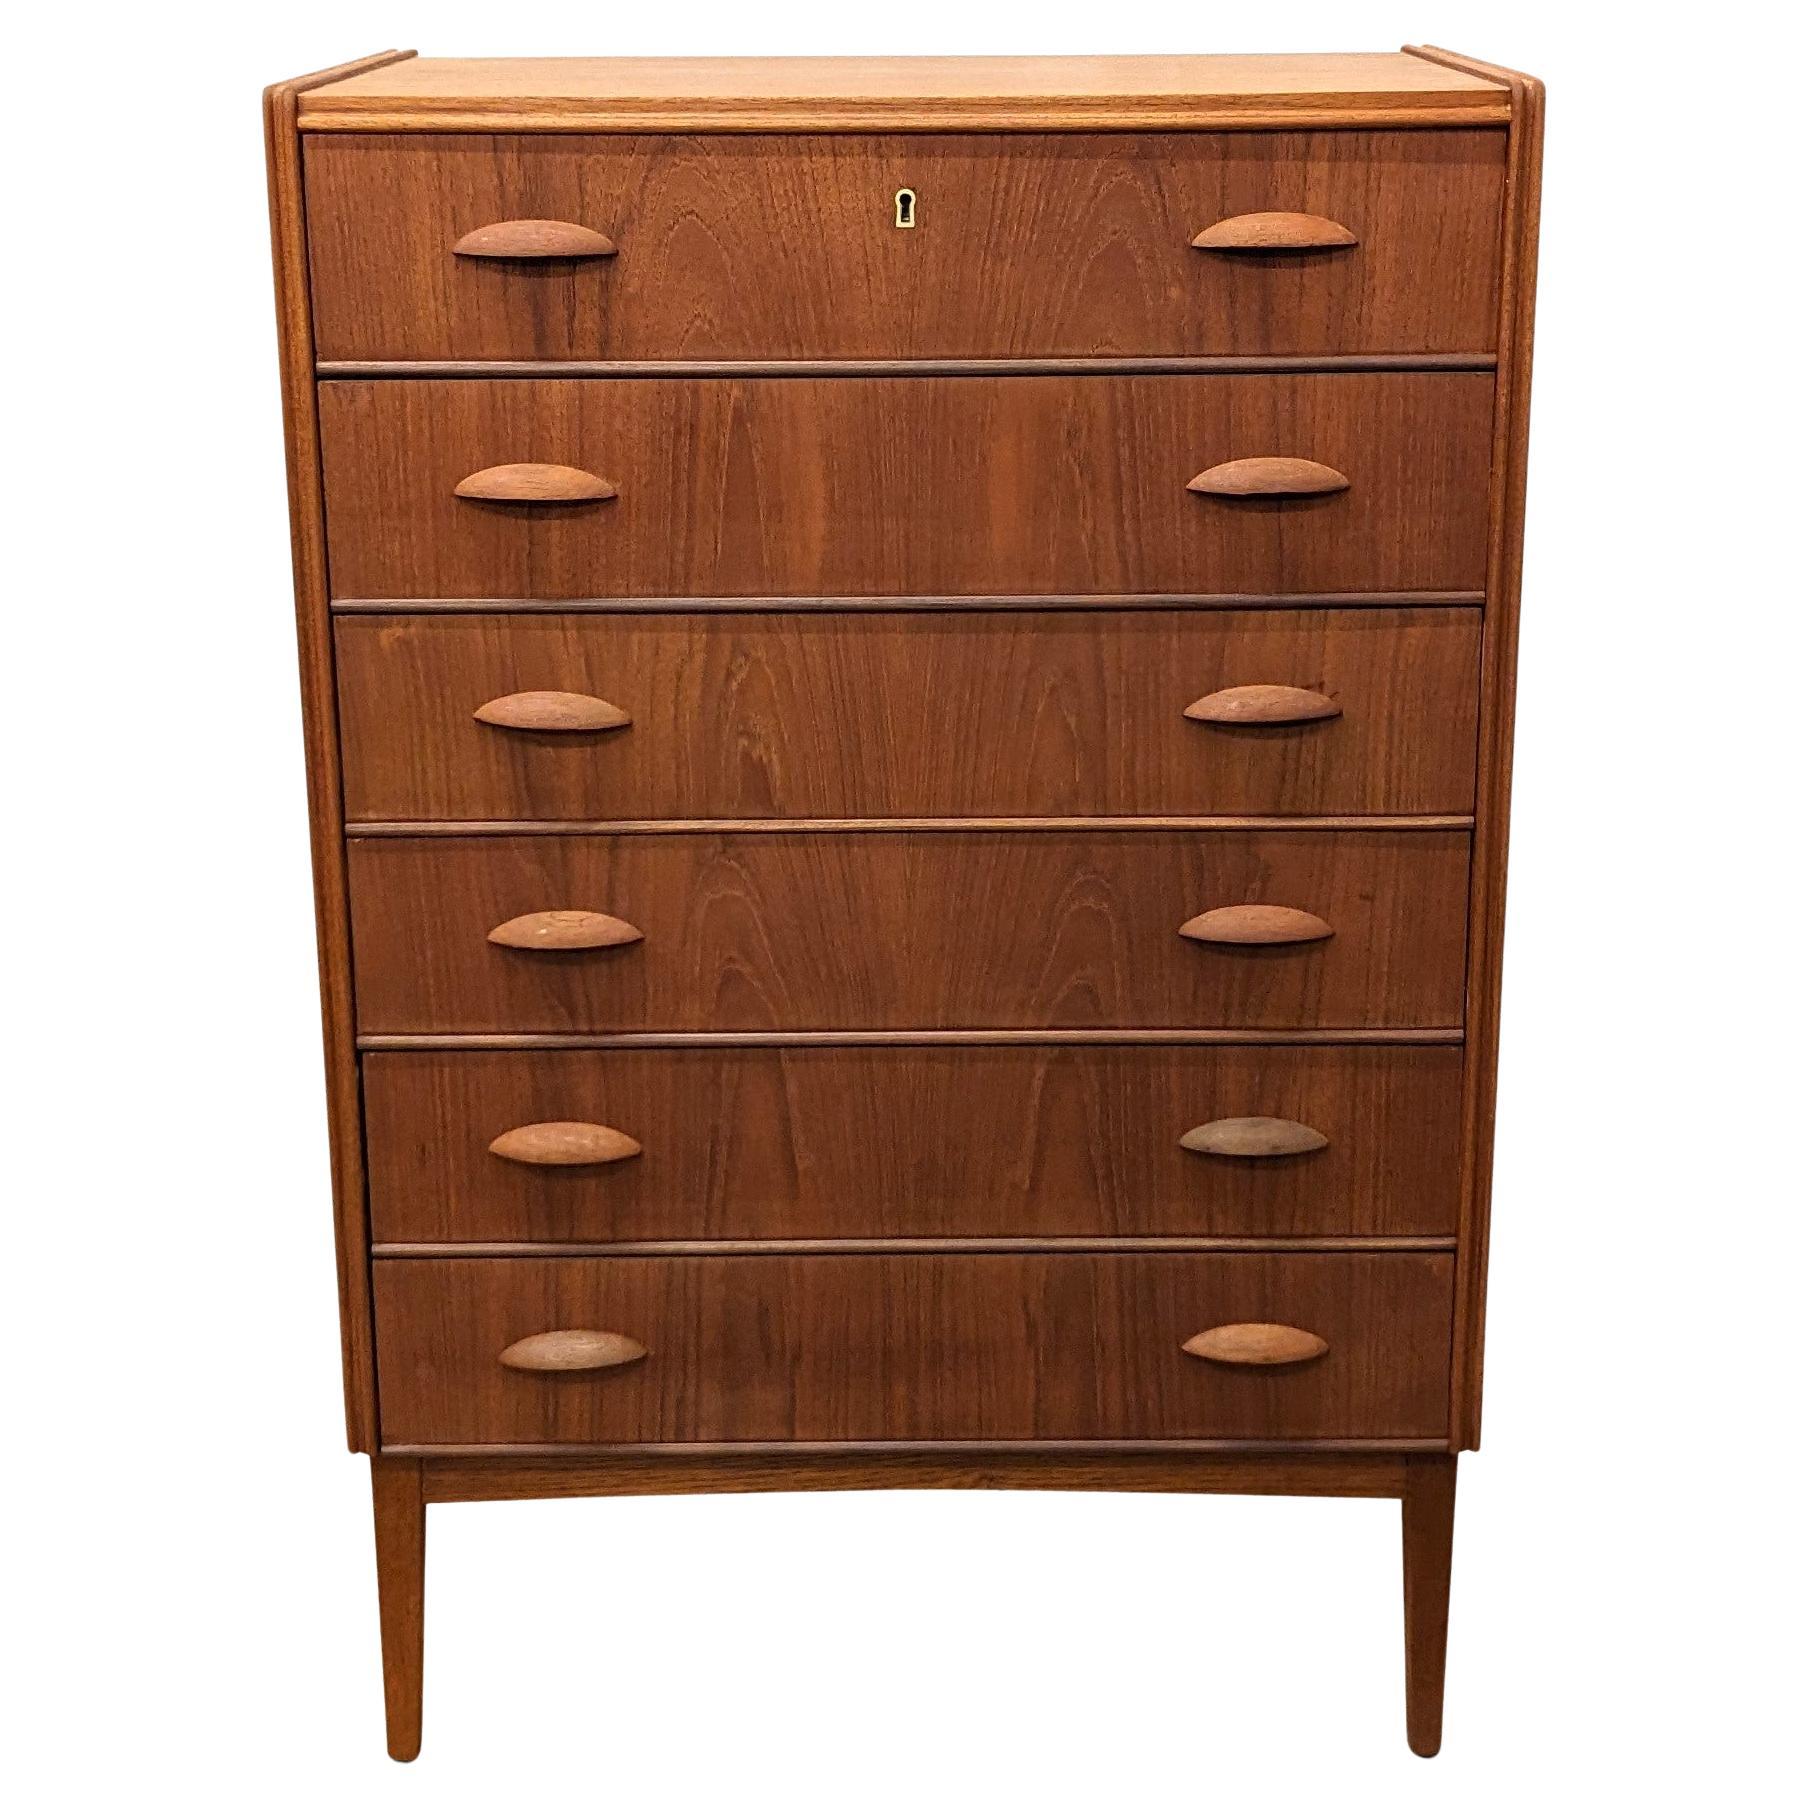 Vintage Danish Mid Century Teak Dresser - 122369 For Sale